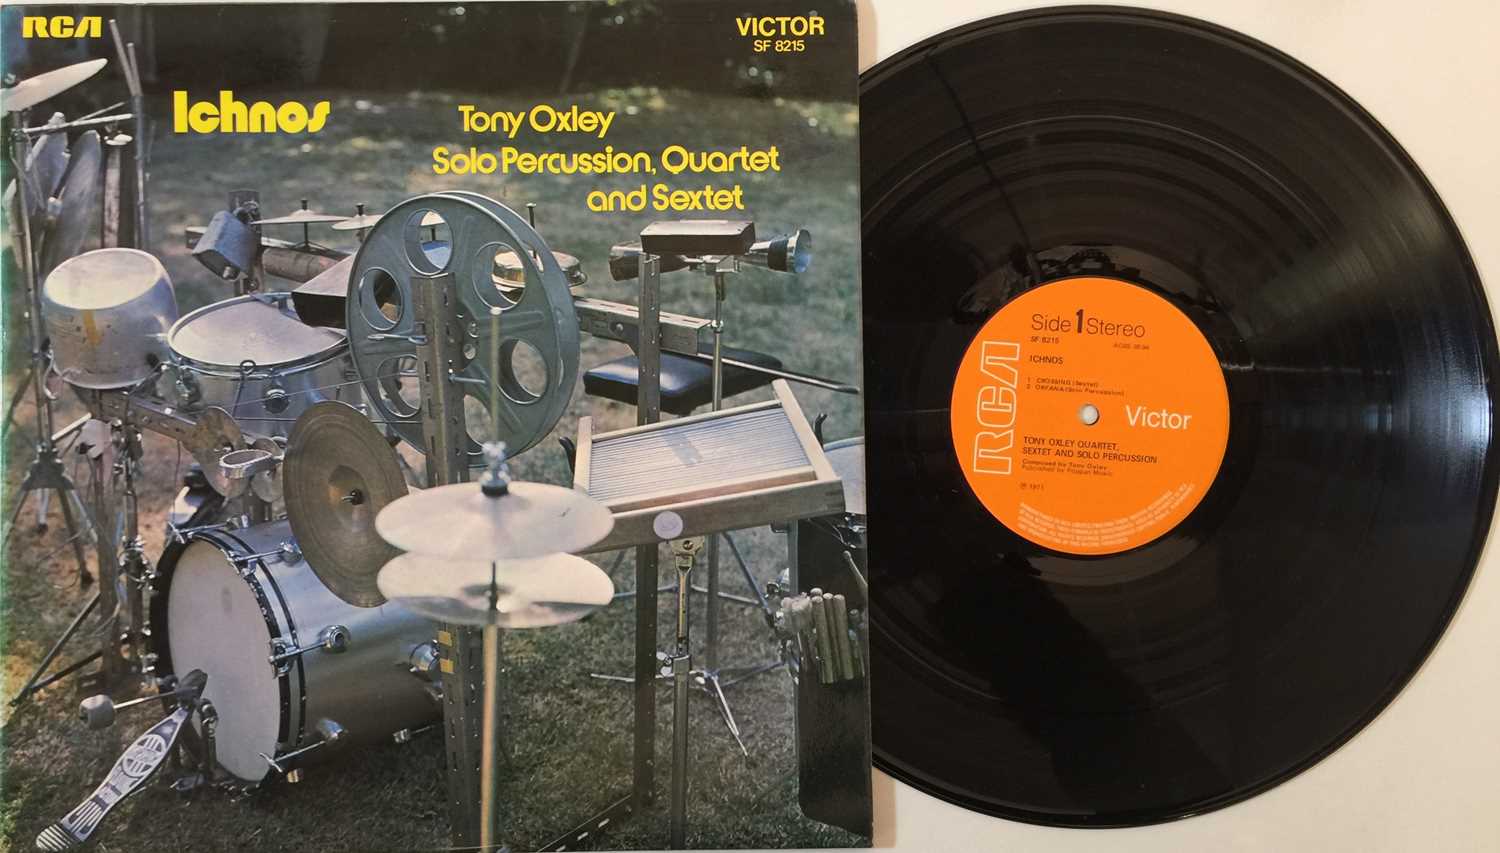 Lot 1052 - TONY OXLEY - ICHNOS LP (ORIGINAL UK COPY - RCA VICTOR SF 8215)